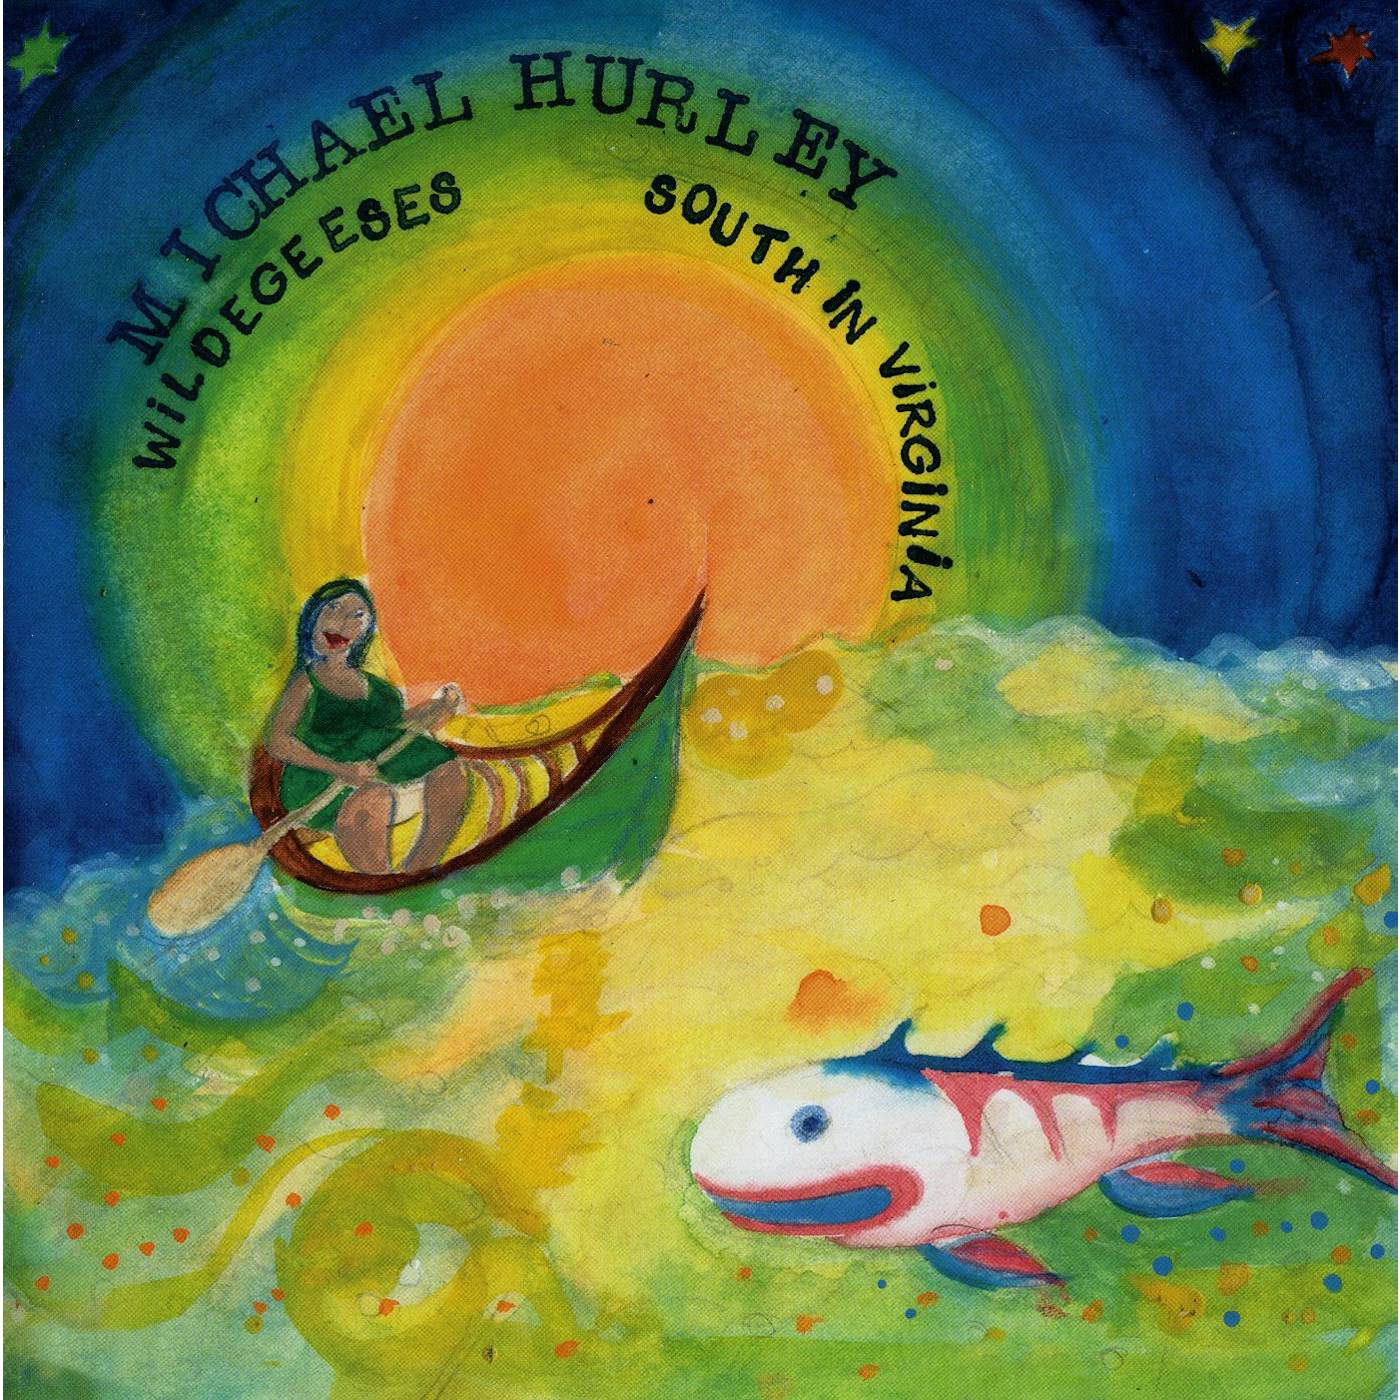 Michael Hurley WILDEGEESES / SOUTH IN VIRGINIA Vinyl Record